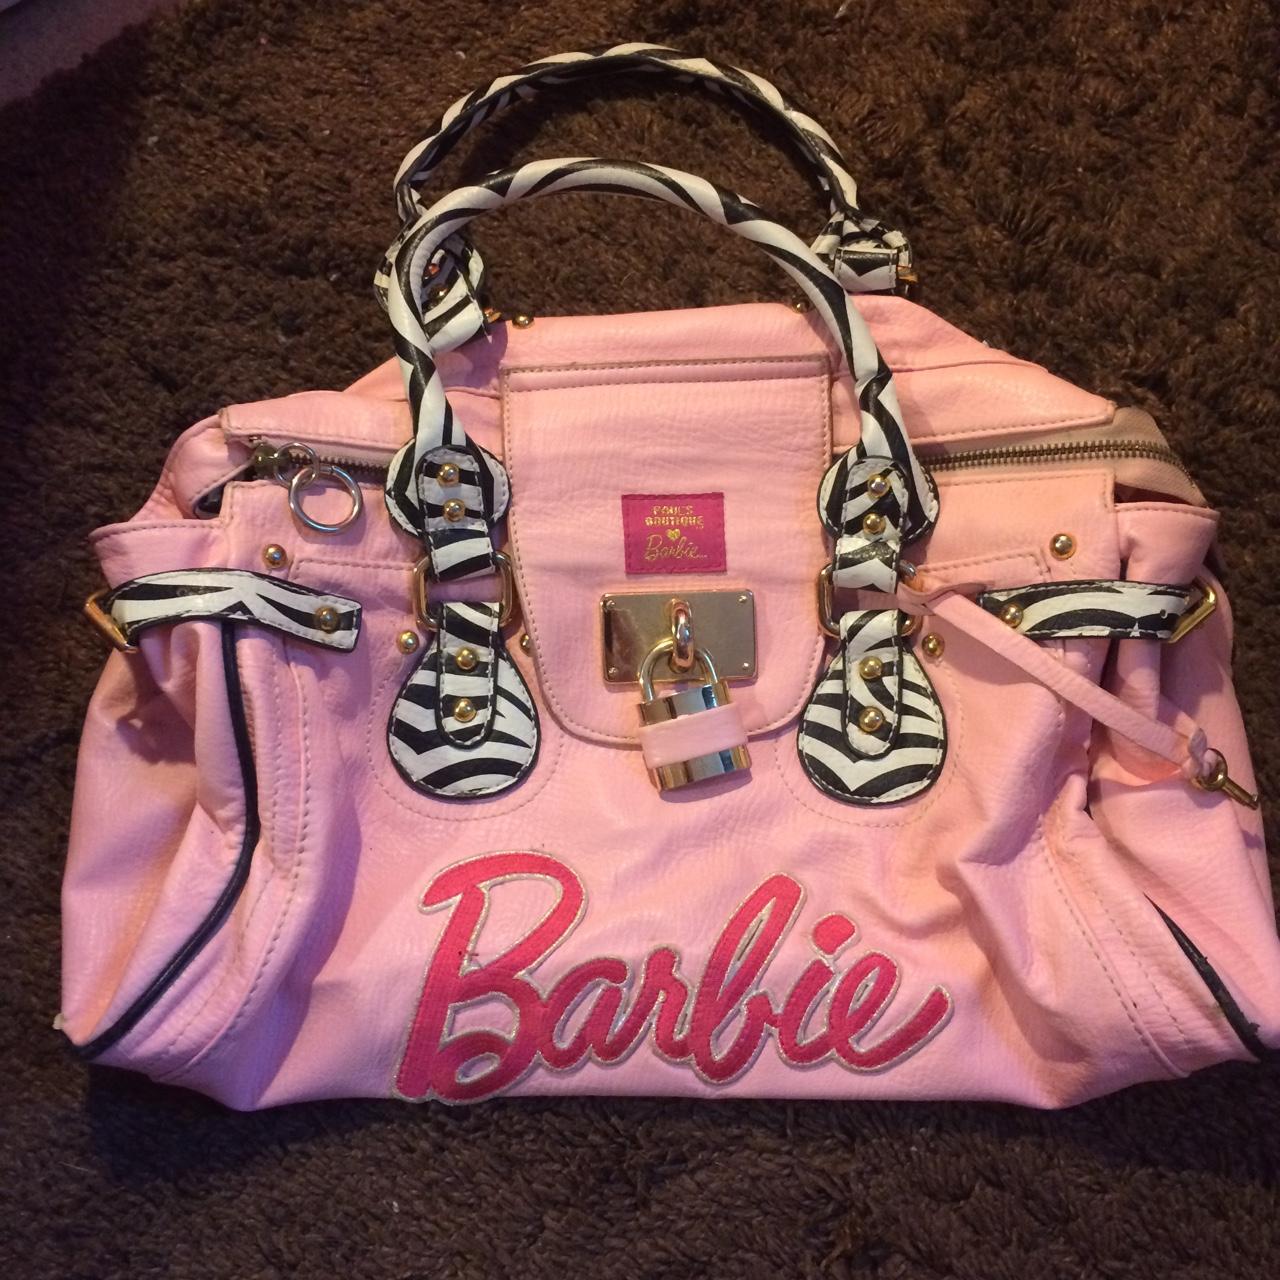 Malibu Barbie Bag – THE EPISODE